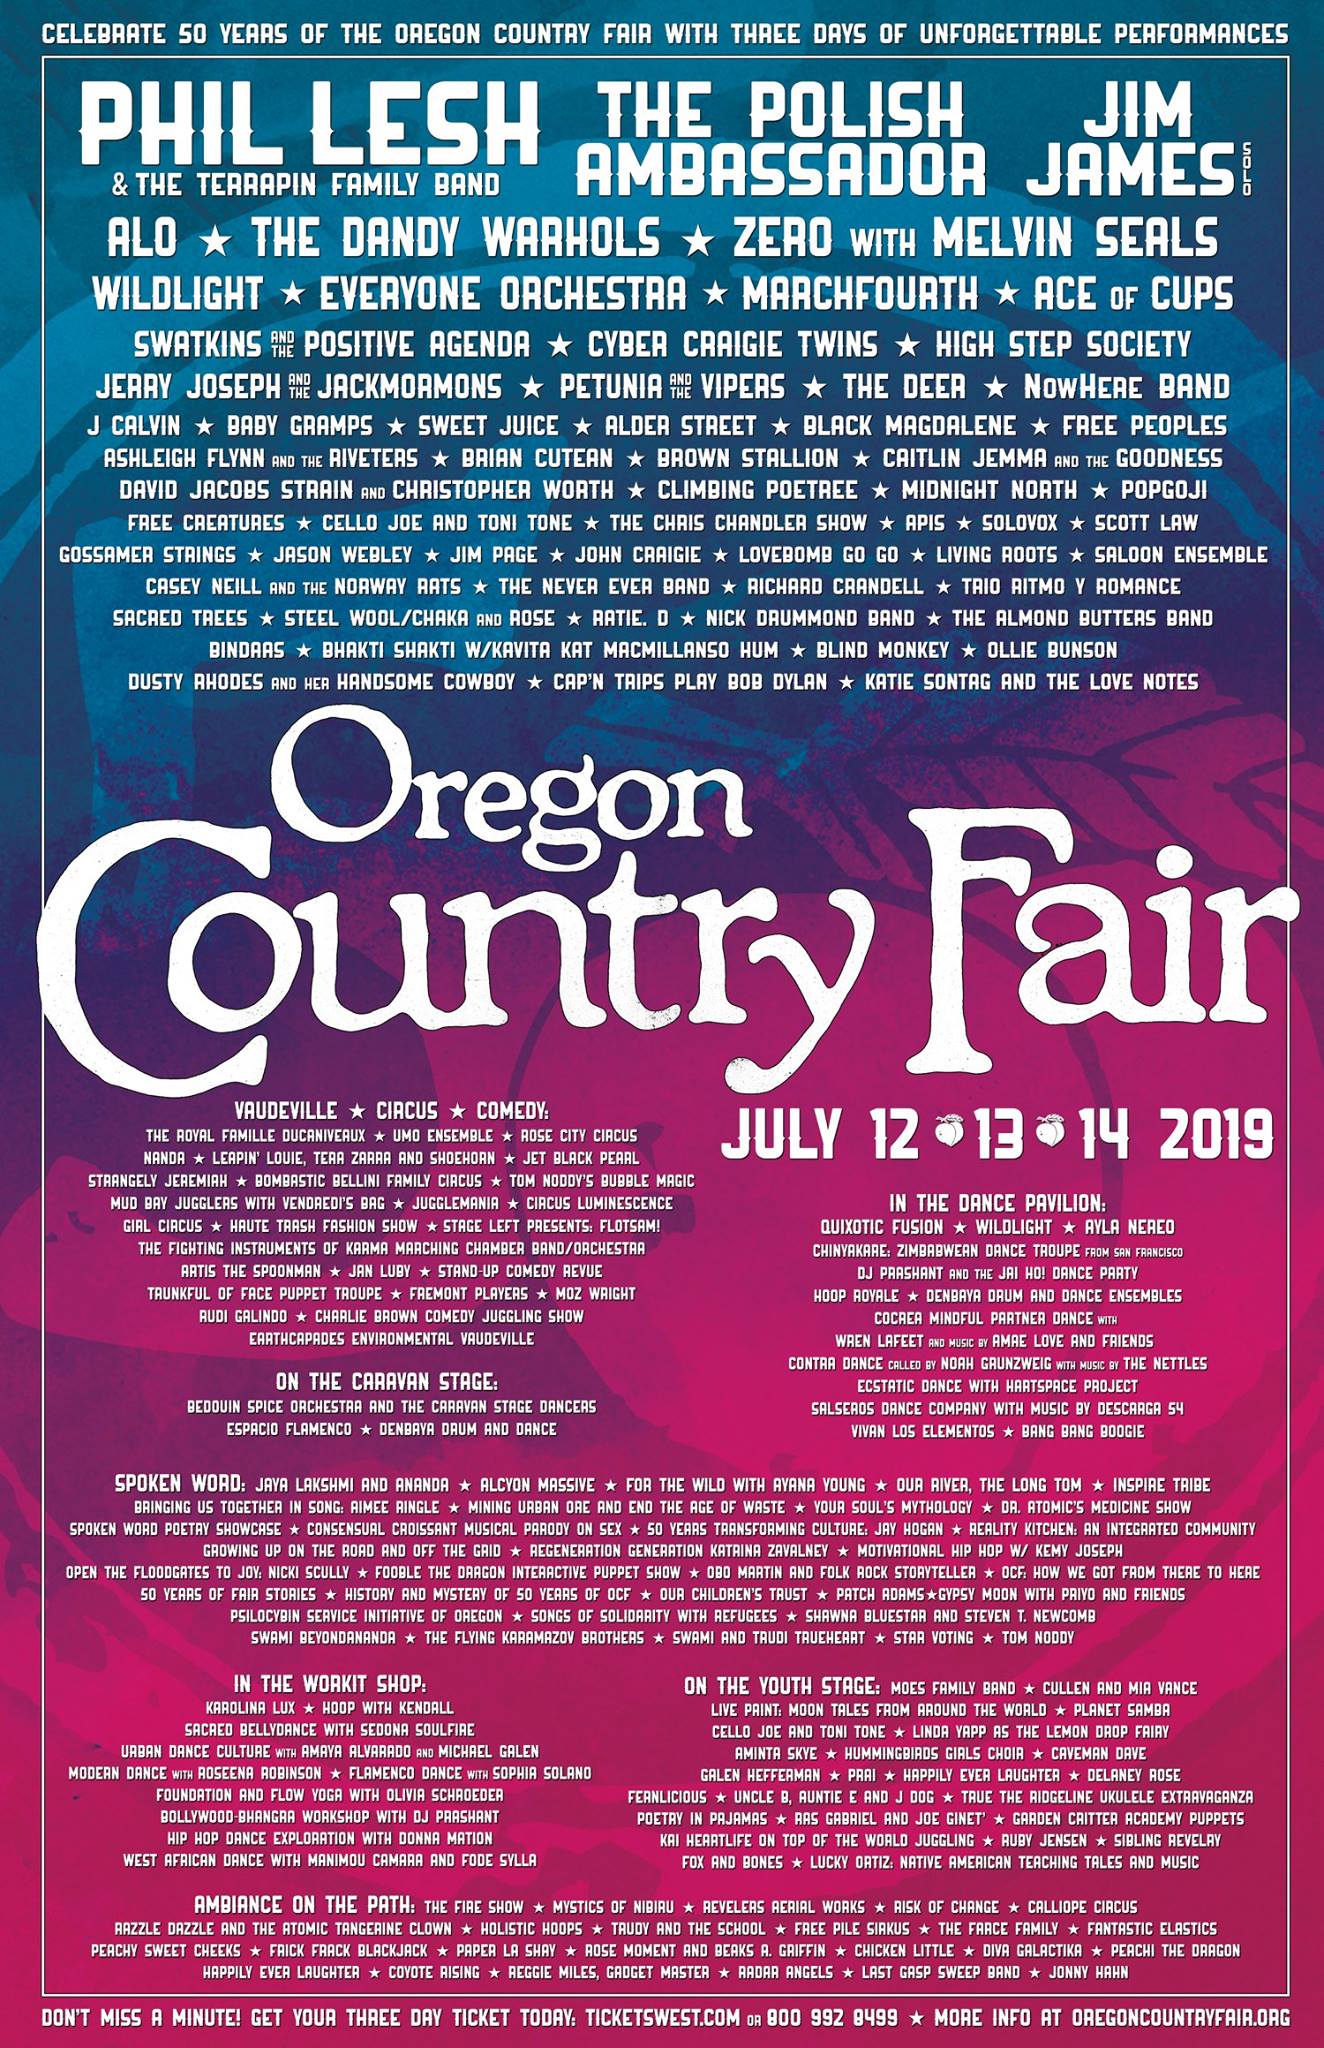 Oregon Country Fair Announces 2019 Lineup: Phil Lesh & The Terrapin